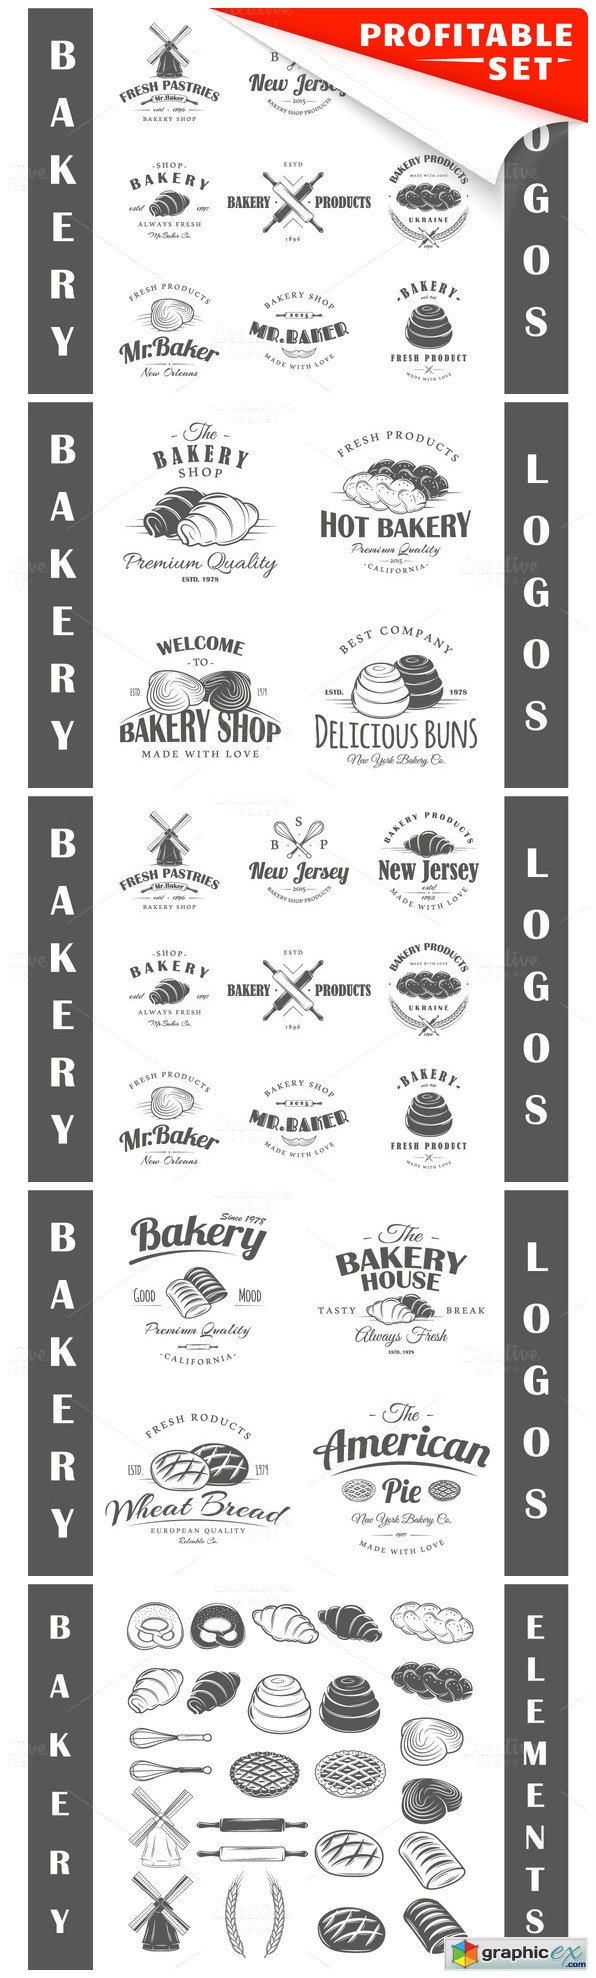 17 Bakery logos templates